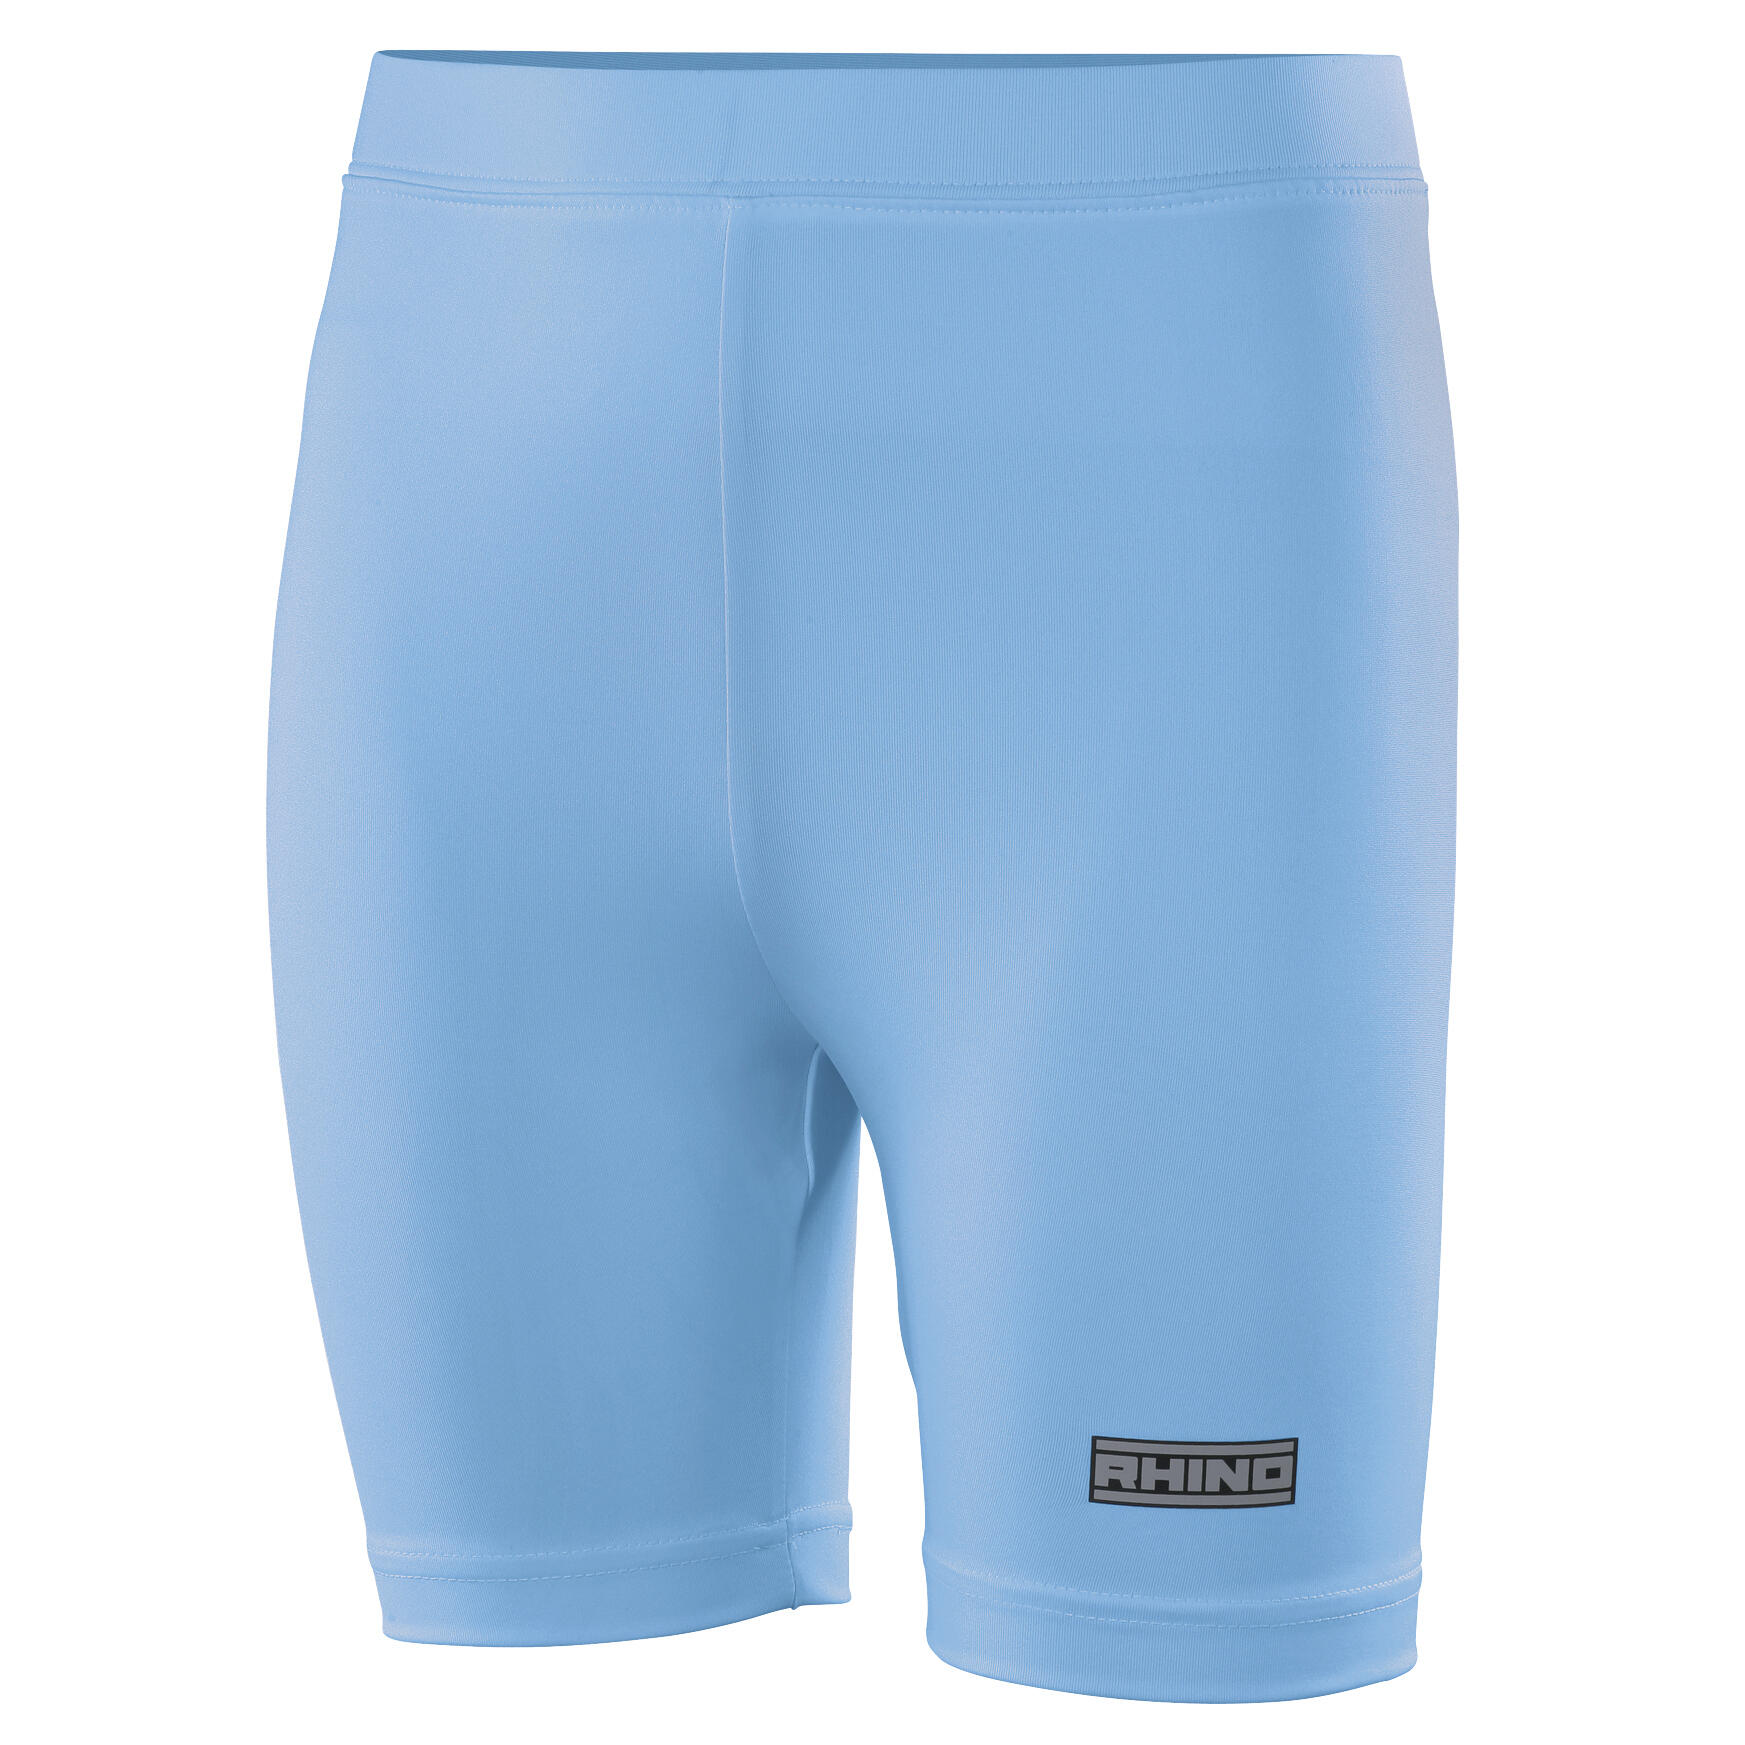 RHINO Childrens Boys Thermal Underwear Sports Base Layer Shorts (Light Blue)